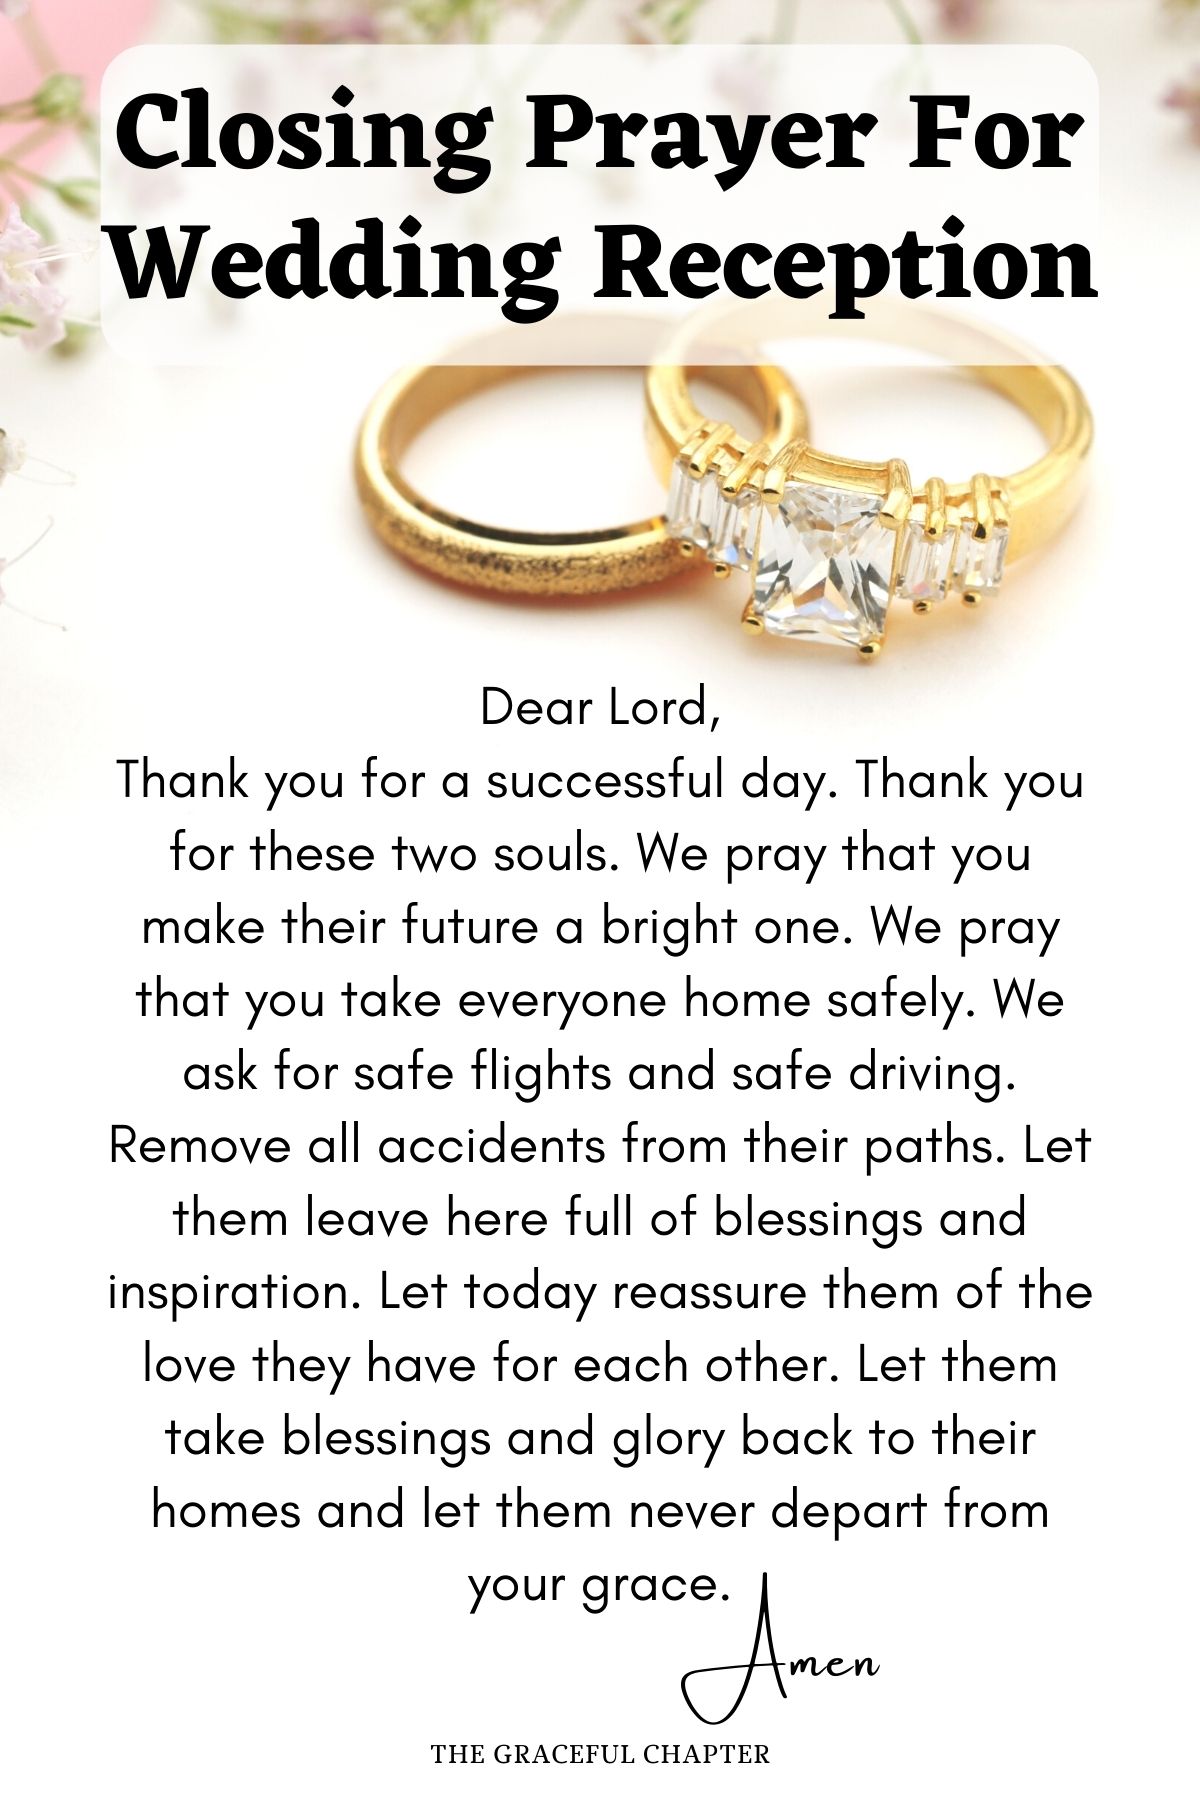 Closing prayer for wedding reception